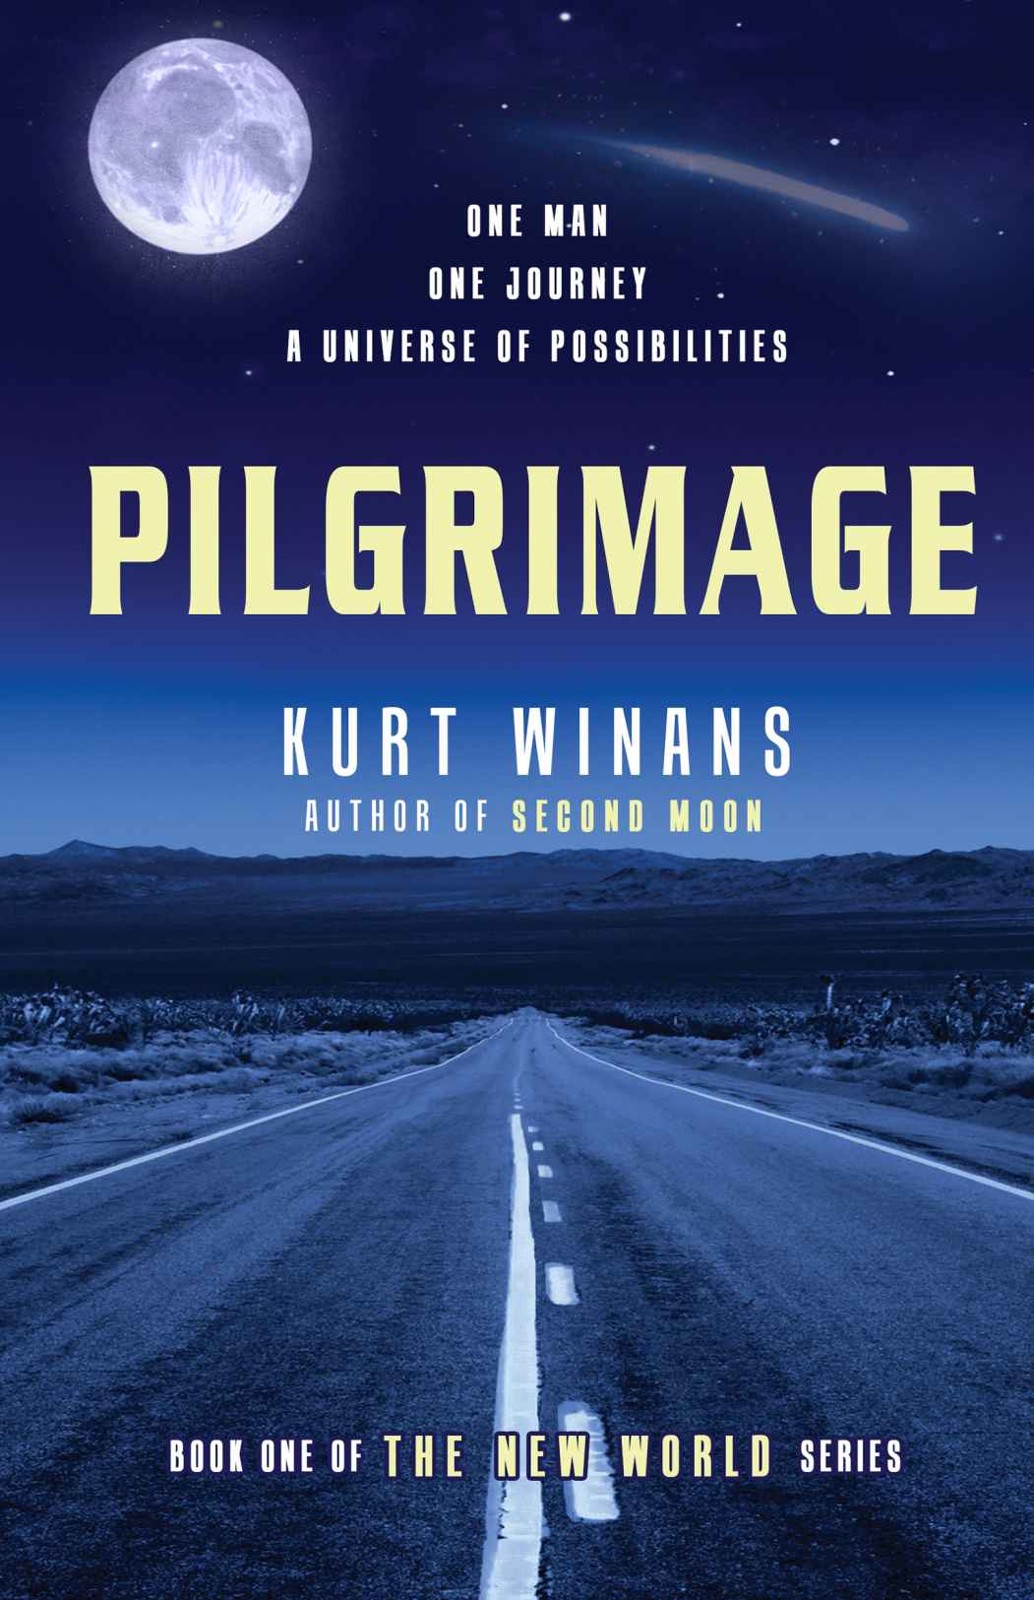 Pilgrimage (The New World) by Kurt Winans